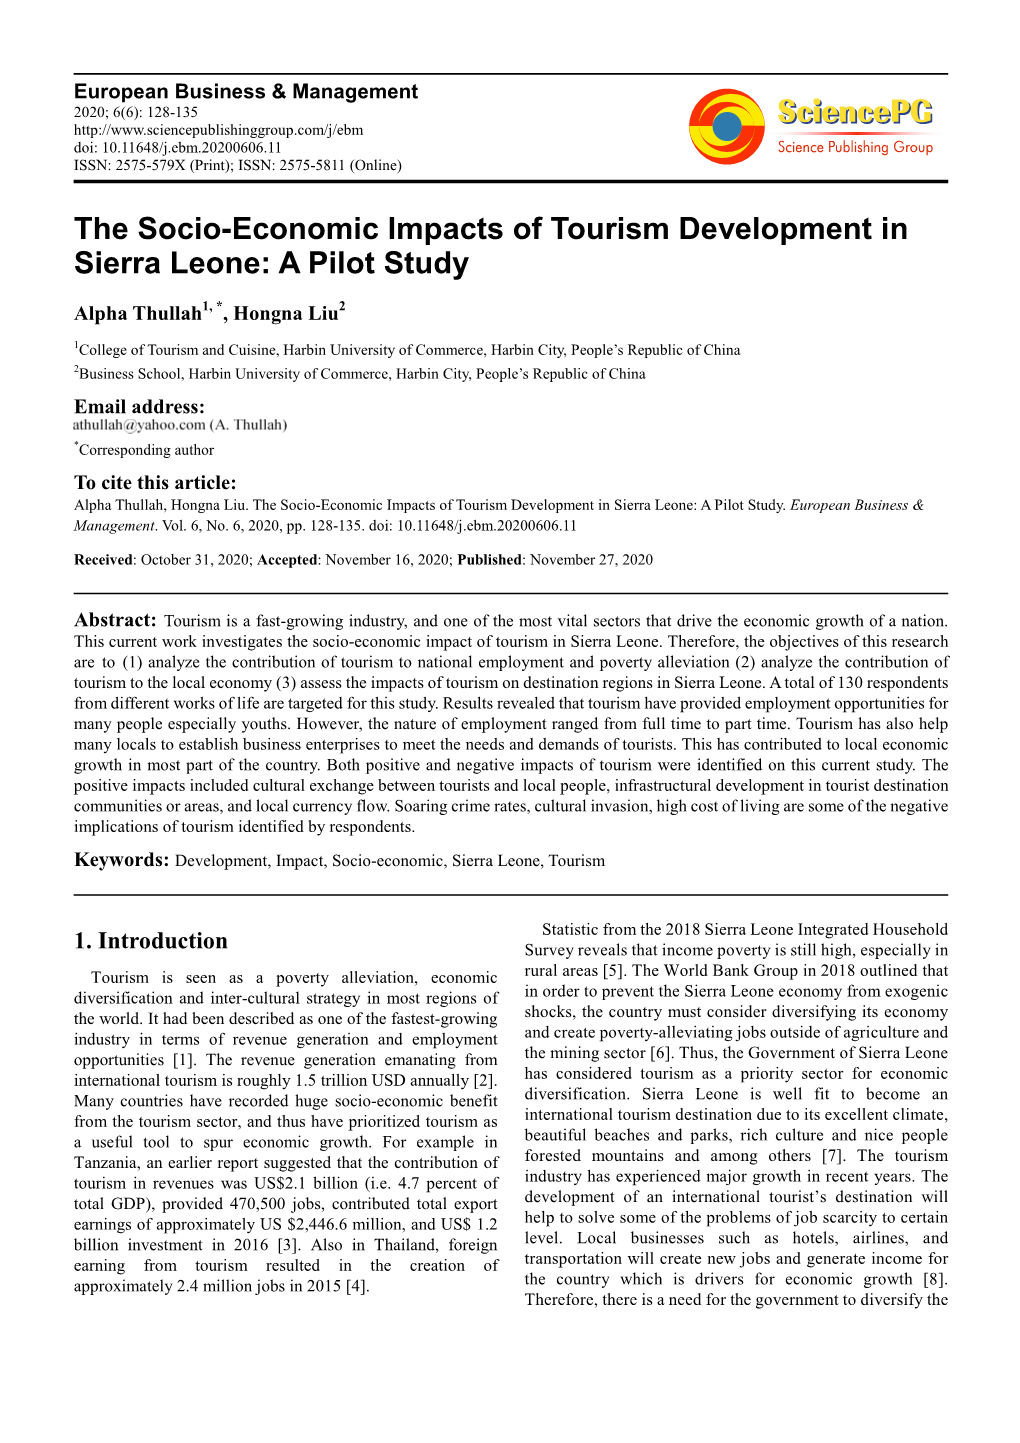 The Socio-Economic Impacts of Tourism Development in Sierra Leone: a Pilot Study